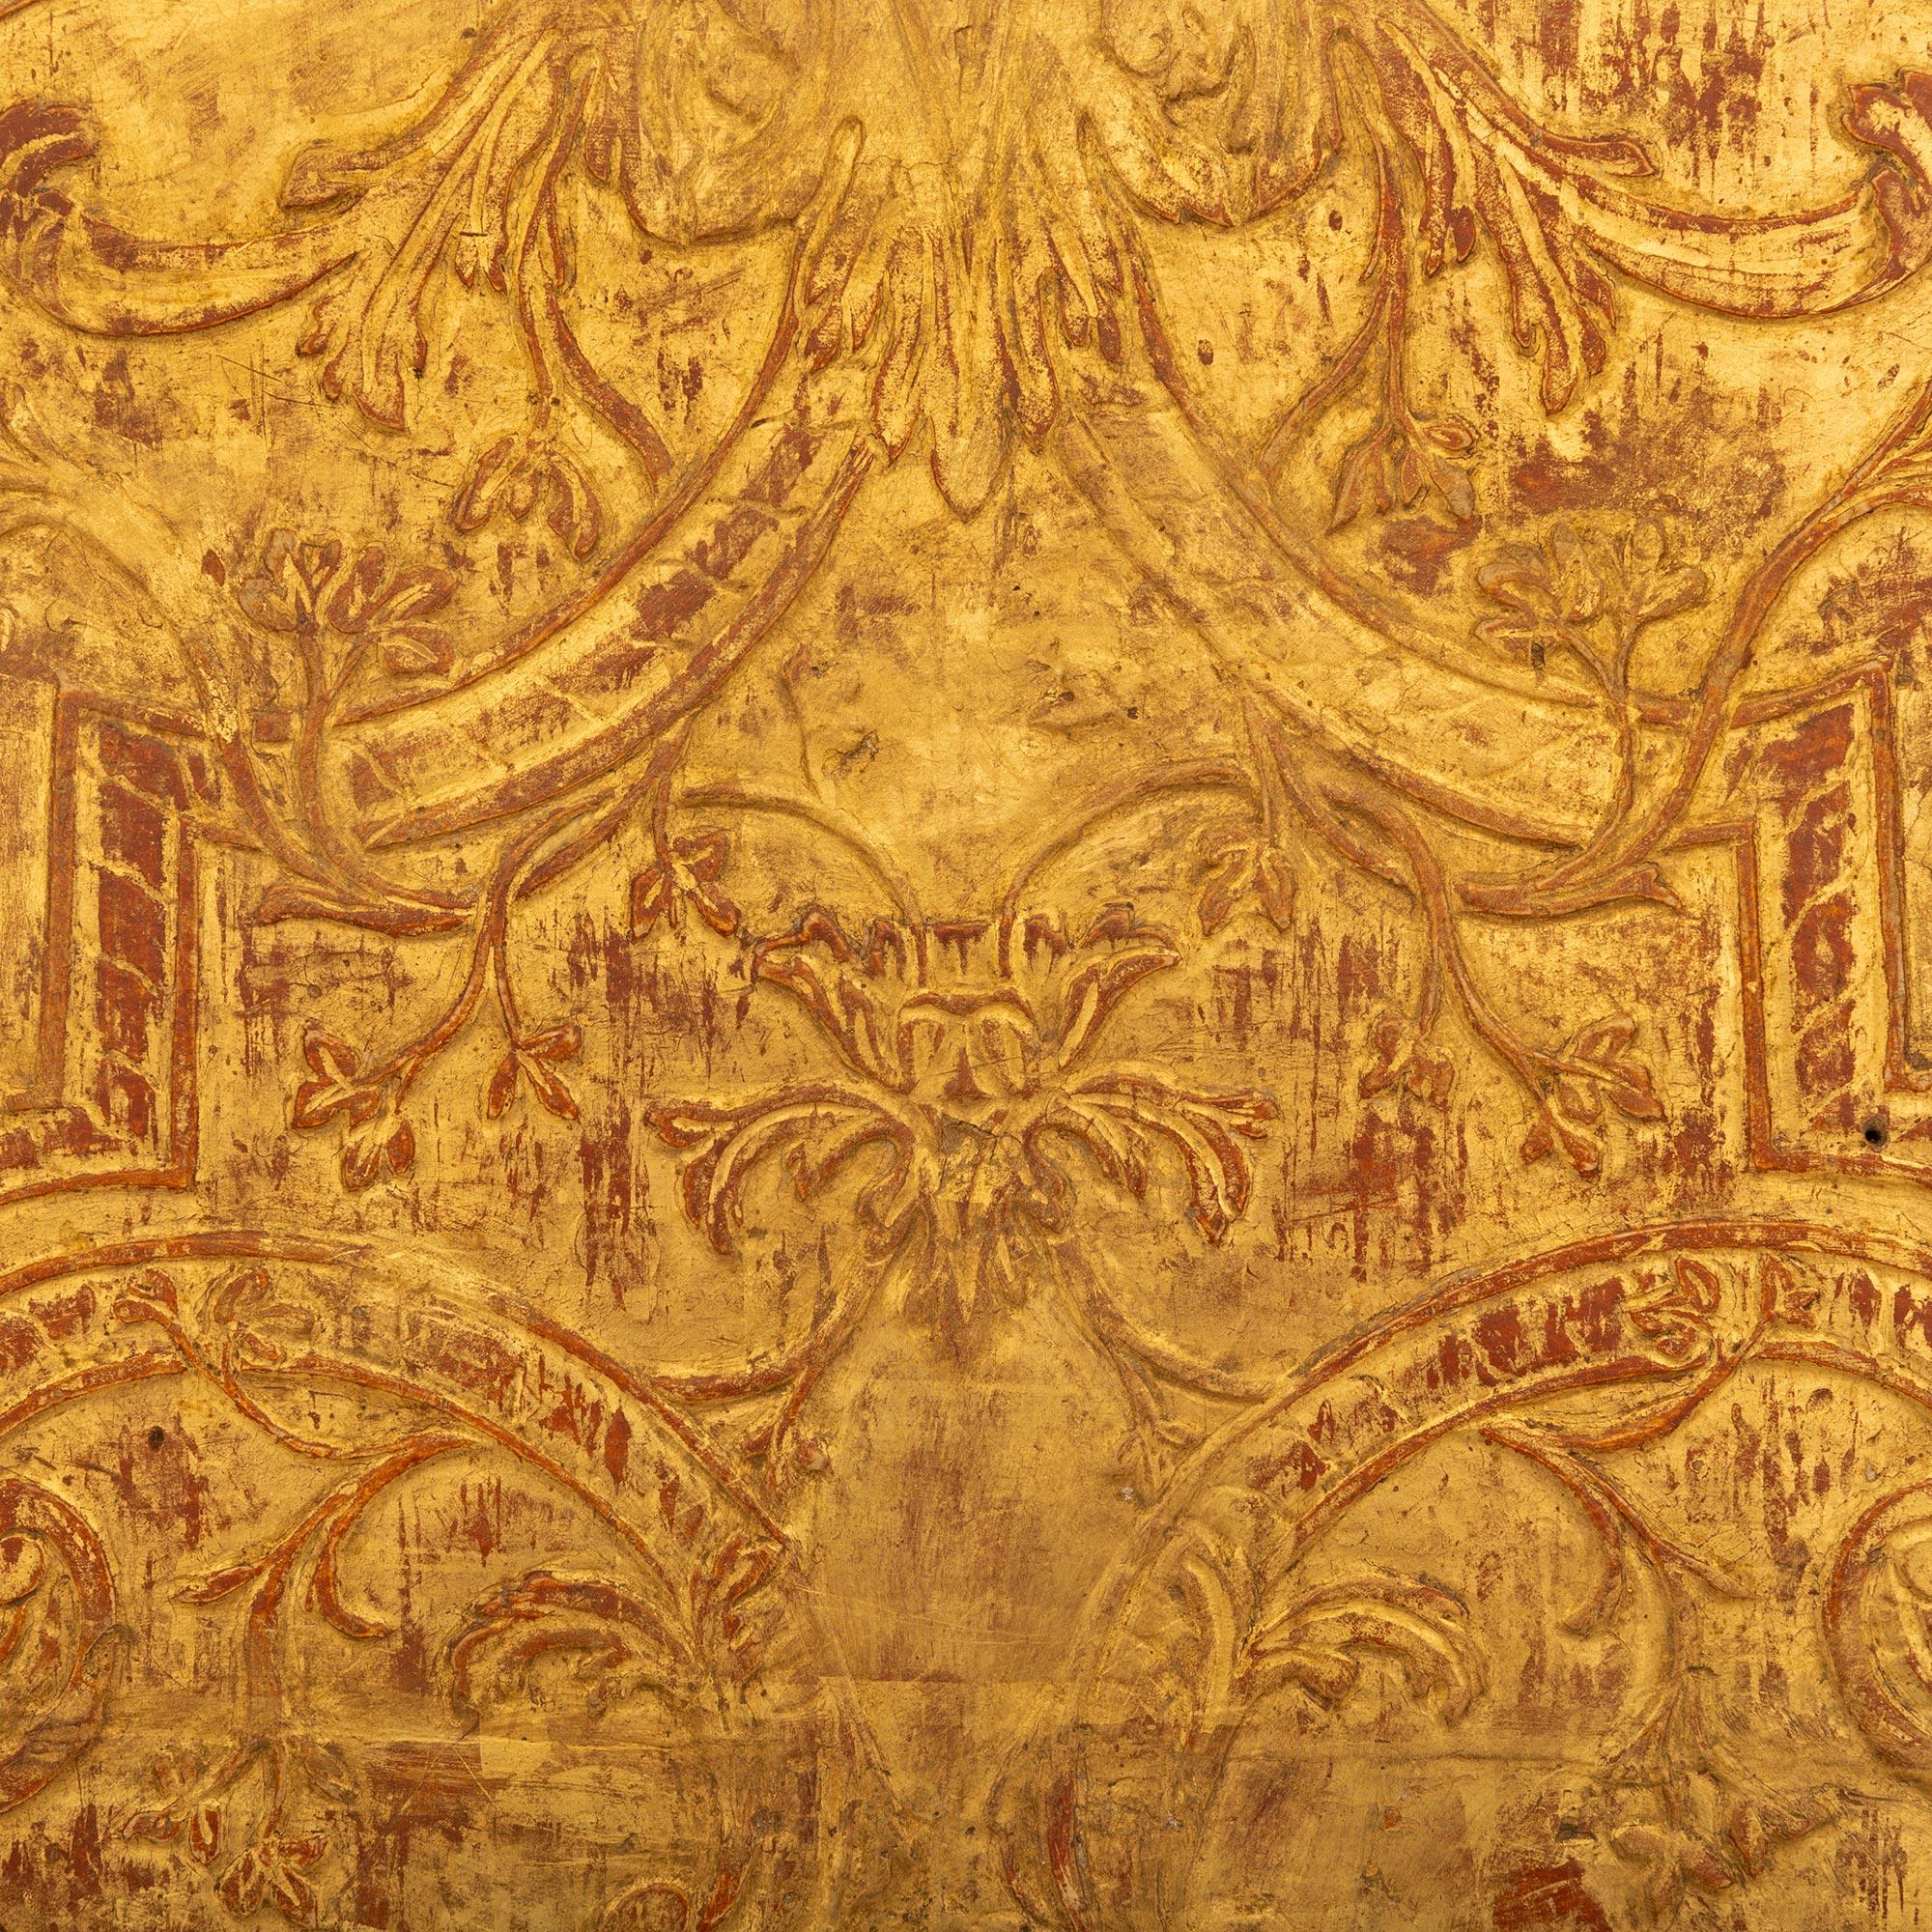 Italian 18th Century Baroque Period Giltwood Wall Decor Panel For Sale 2